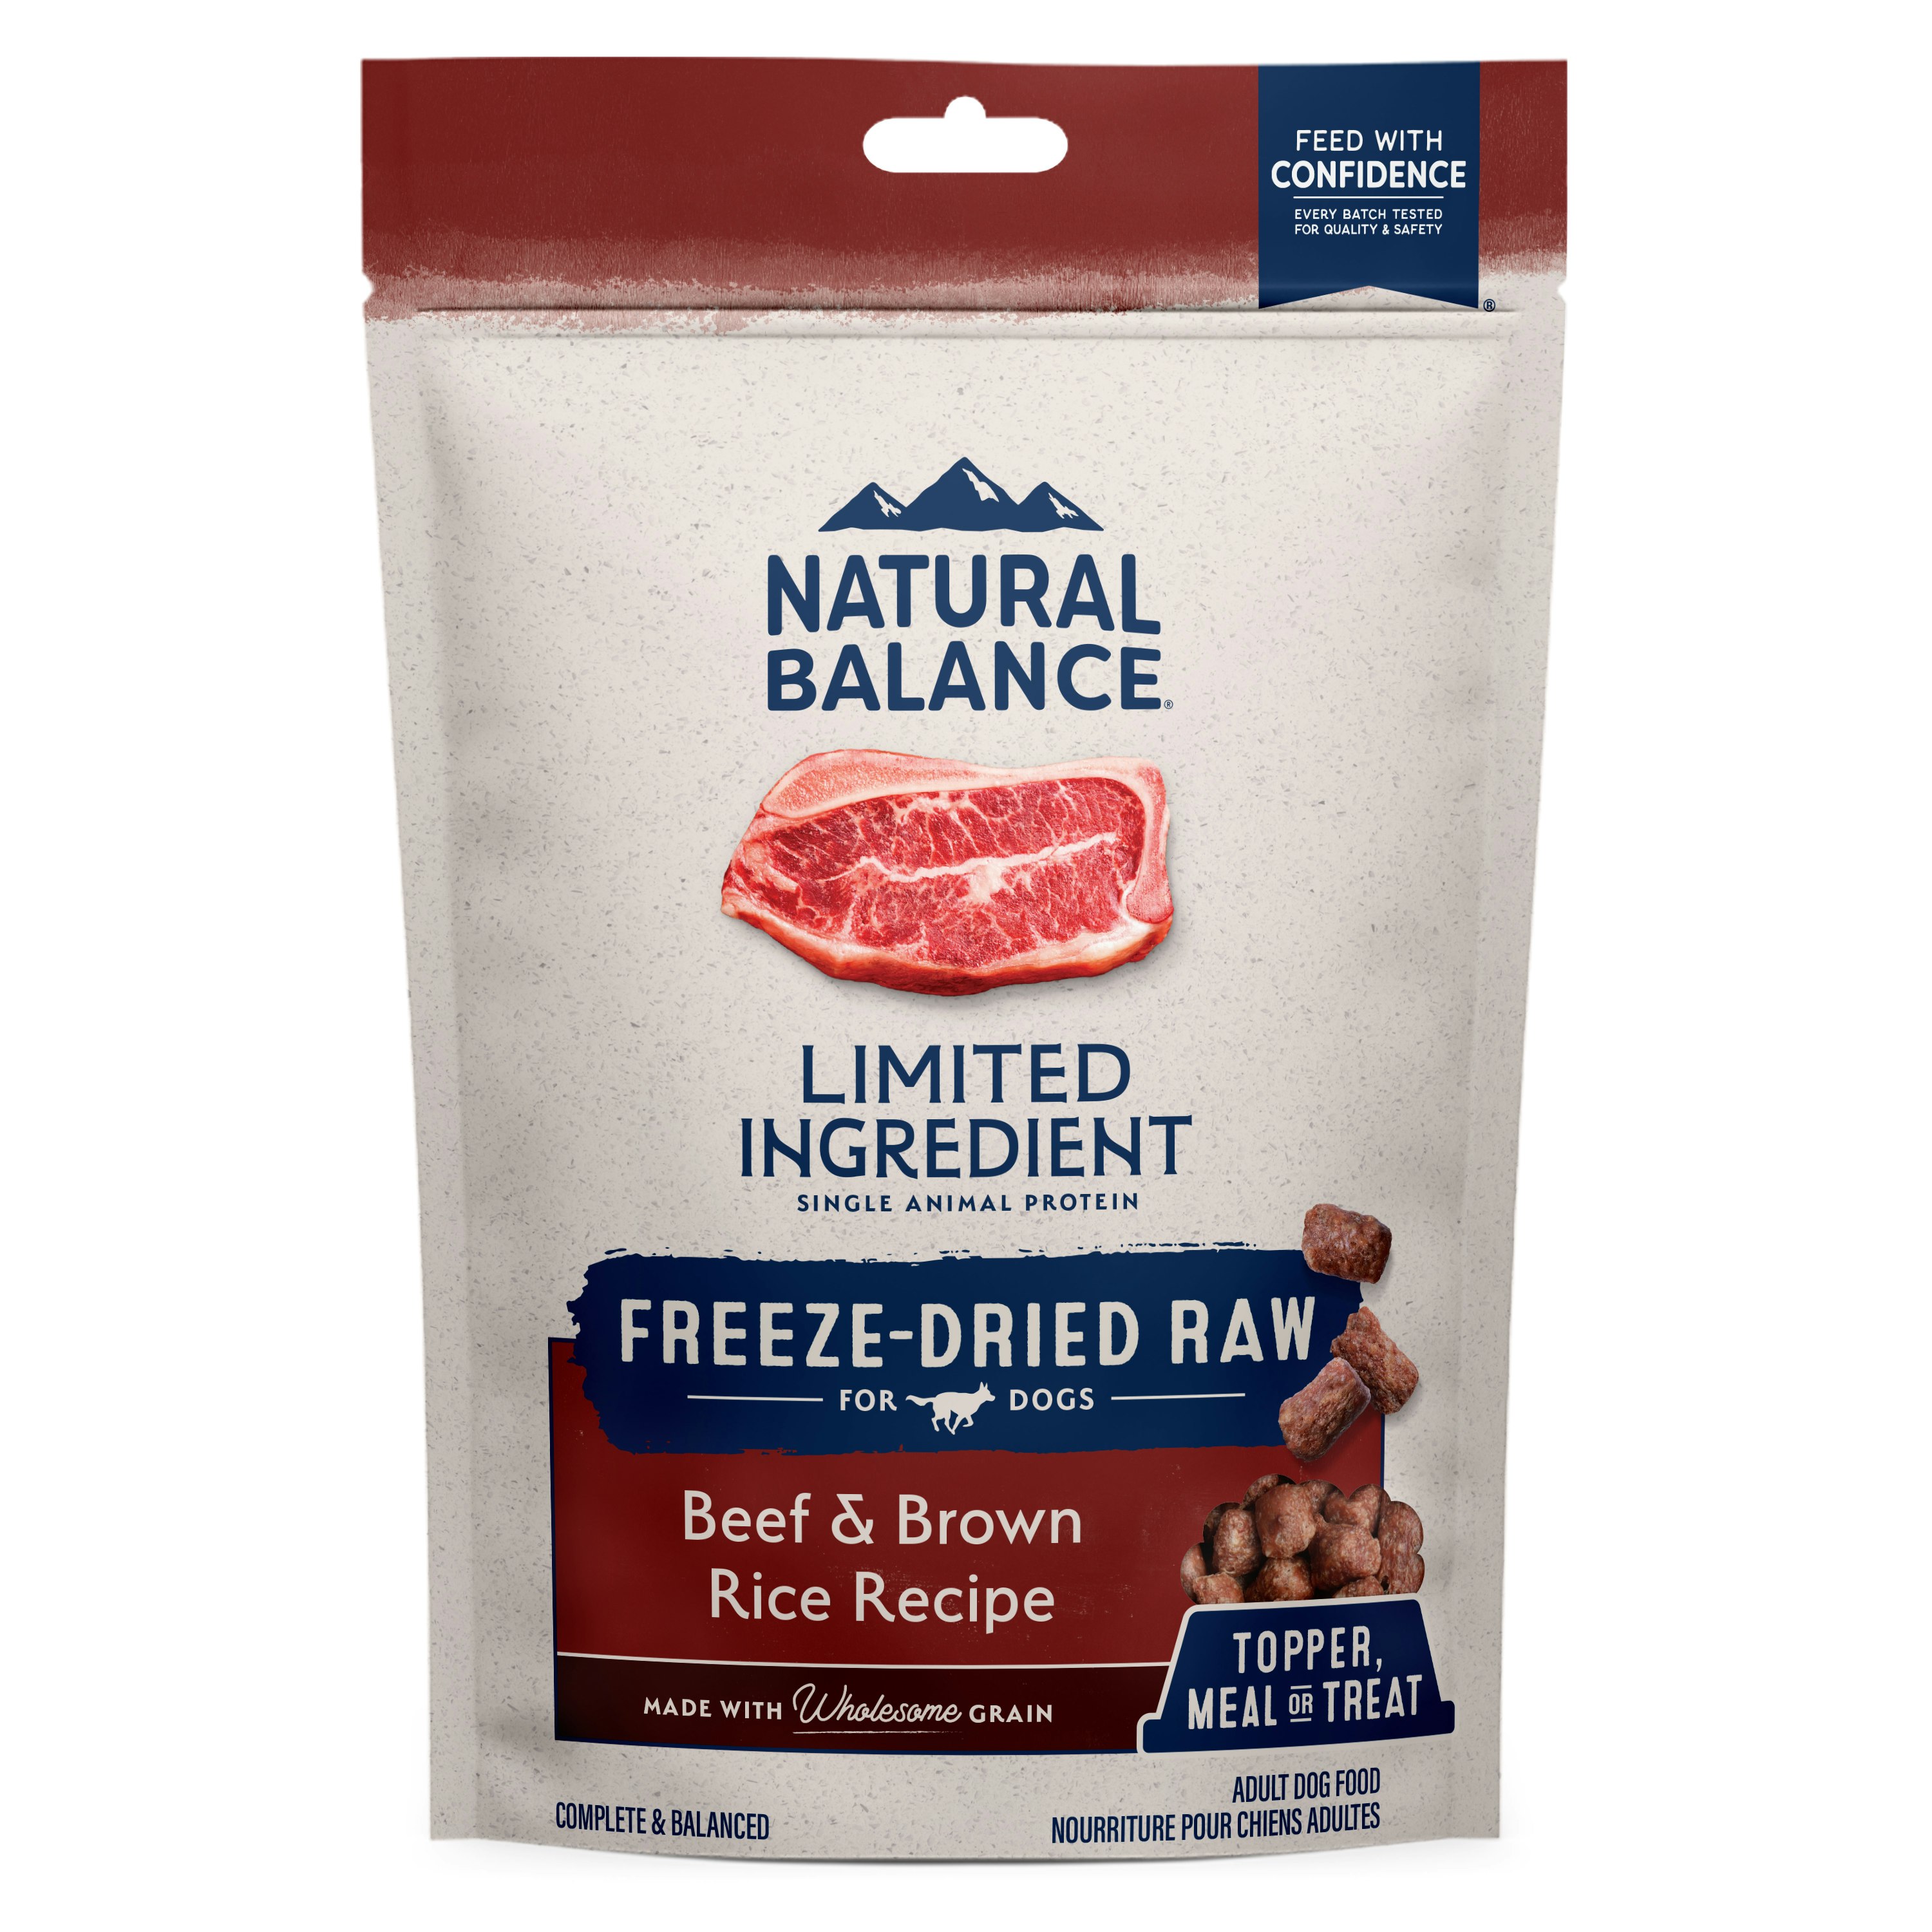 NaturalBalance-LimitedIngredient-FreezeDriedRaw-BeefBwnRice-Dry-DogFood.jpg